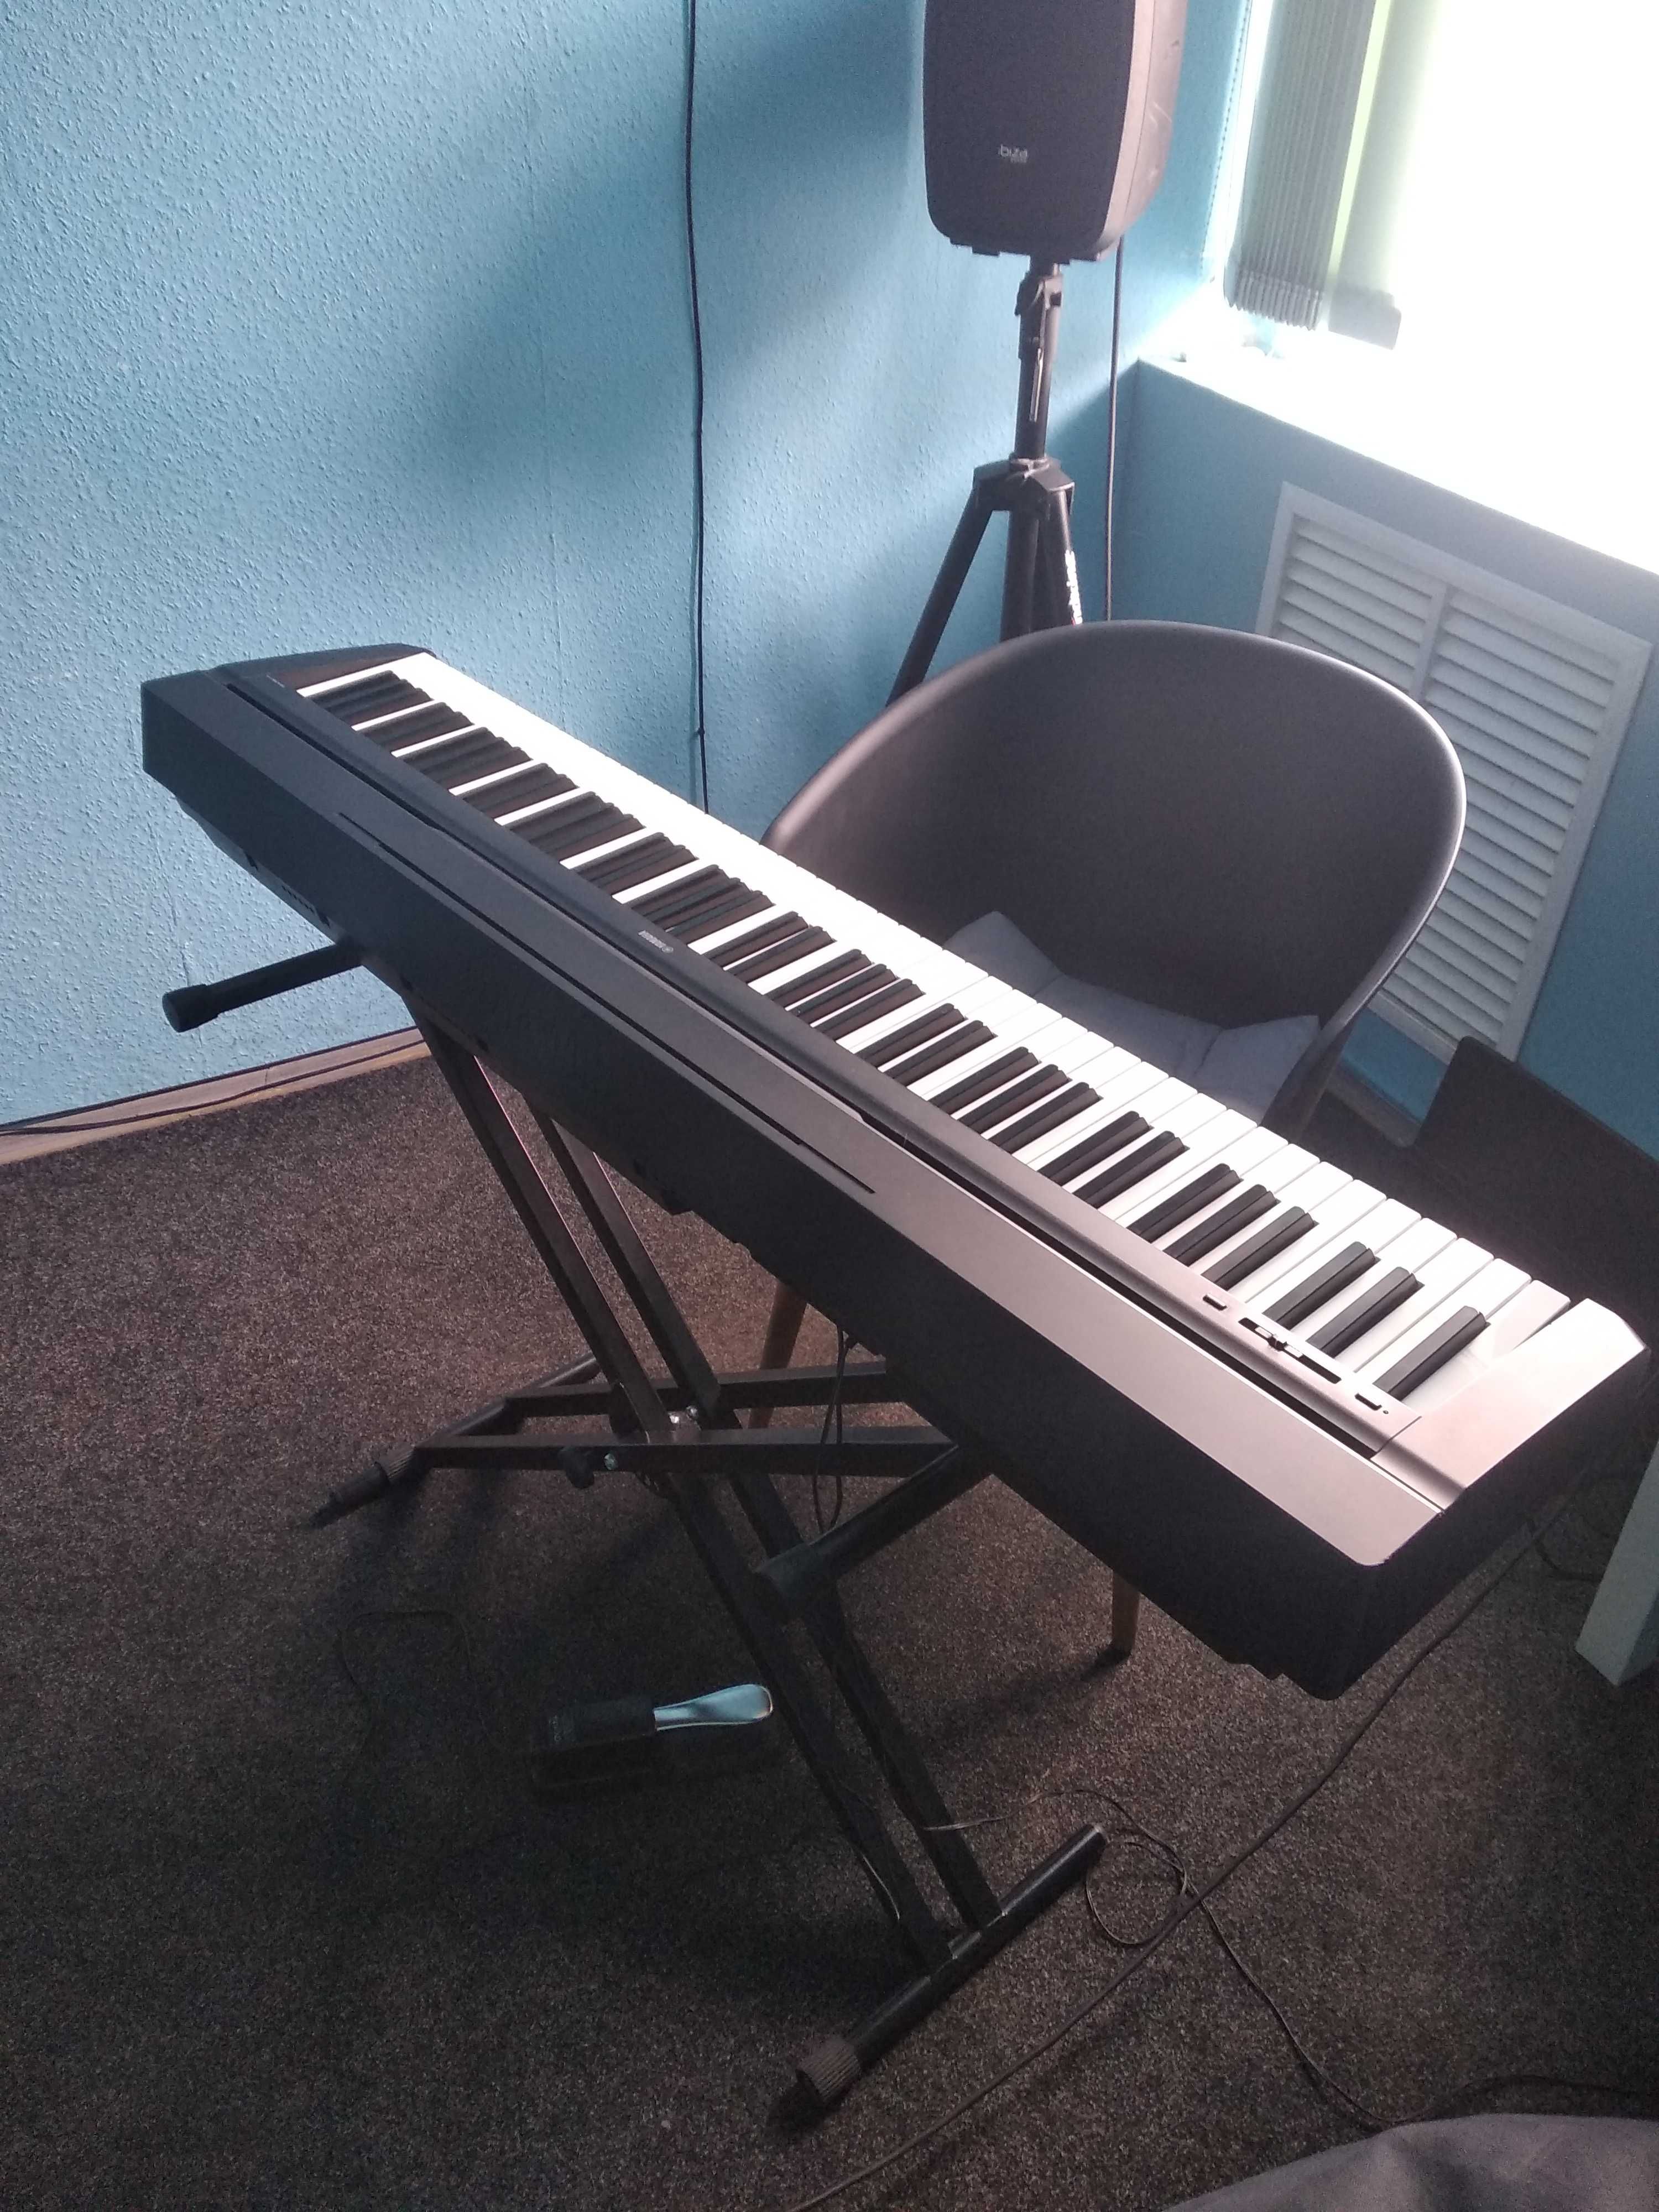 Аренда клавишного инструмента Yamaha (цифровое пианино)